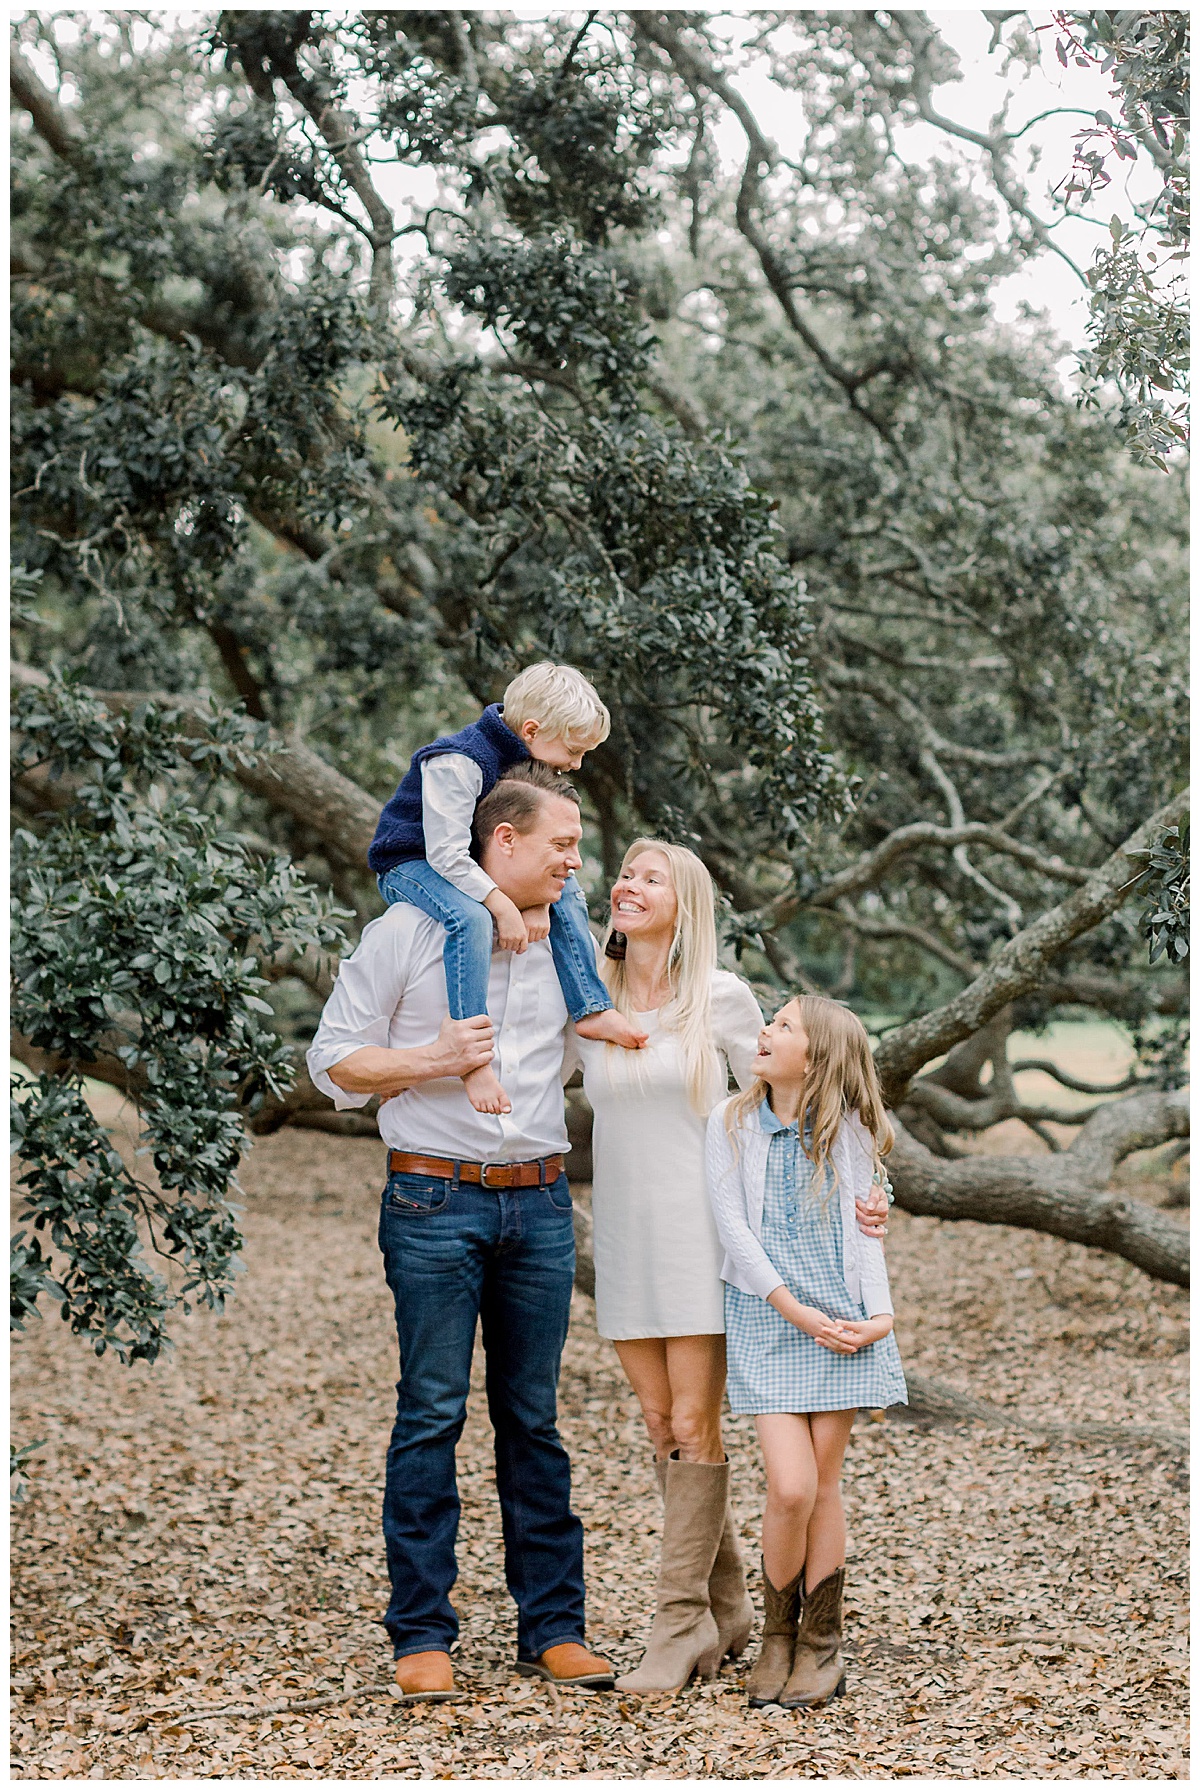 The Speir Family - Family Portraits in Charleston Gardens | Charleston Family Photographer | Candice Adelle Photography_0162.jpg